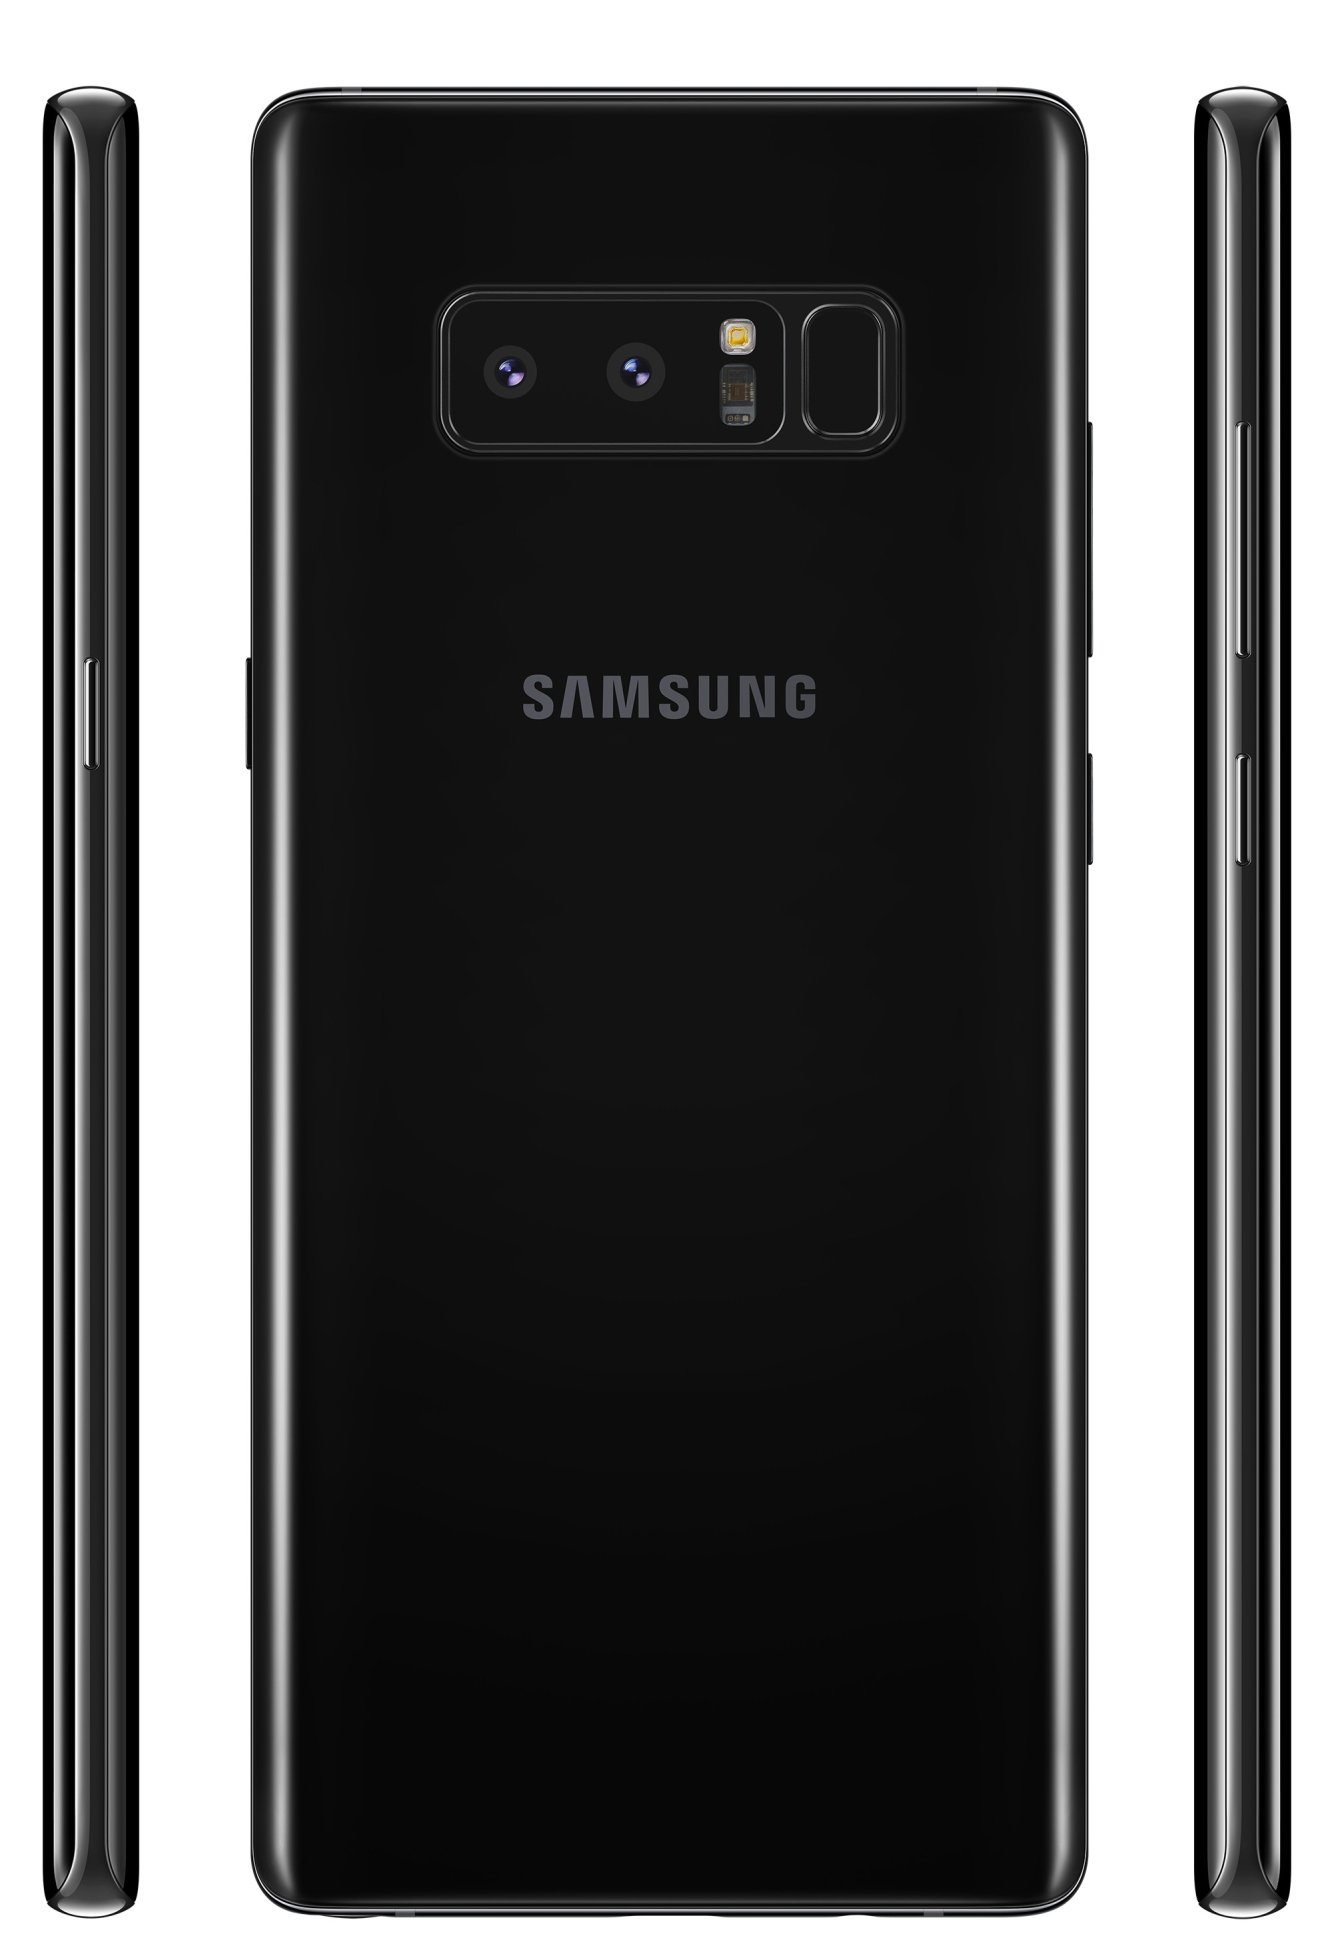 Пресс-фото Samsung Galaxy Note 8: меньше рамок, больше экрана (обновлено)-3